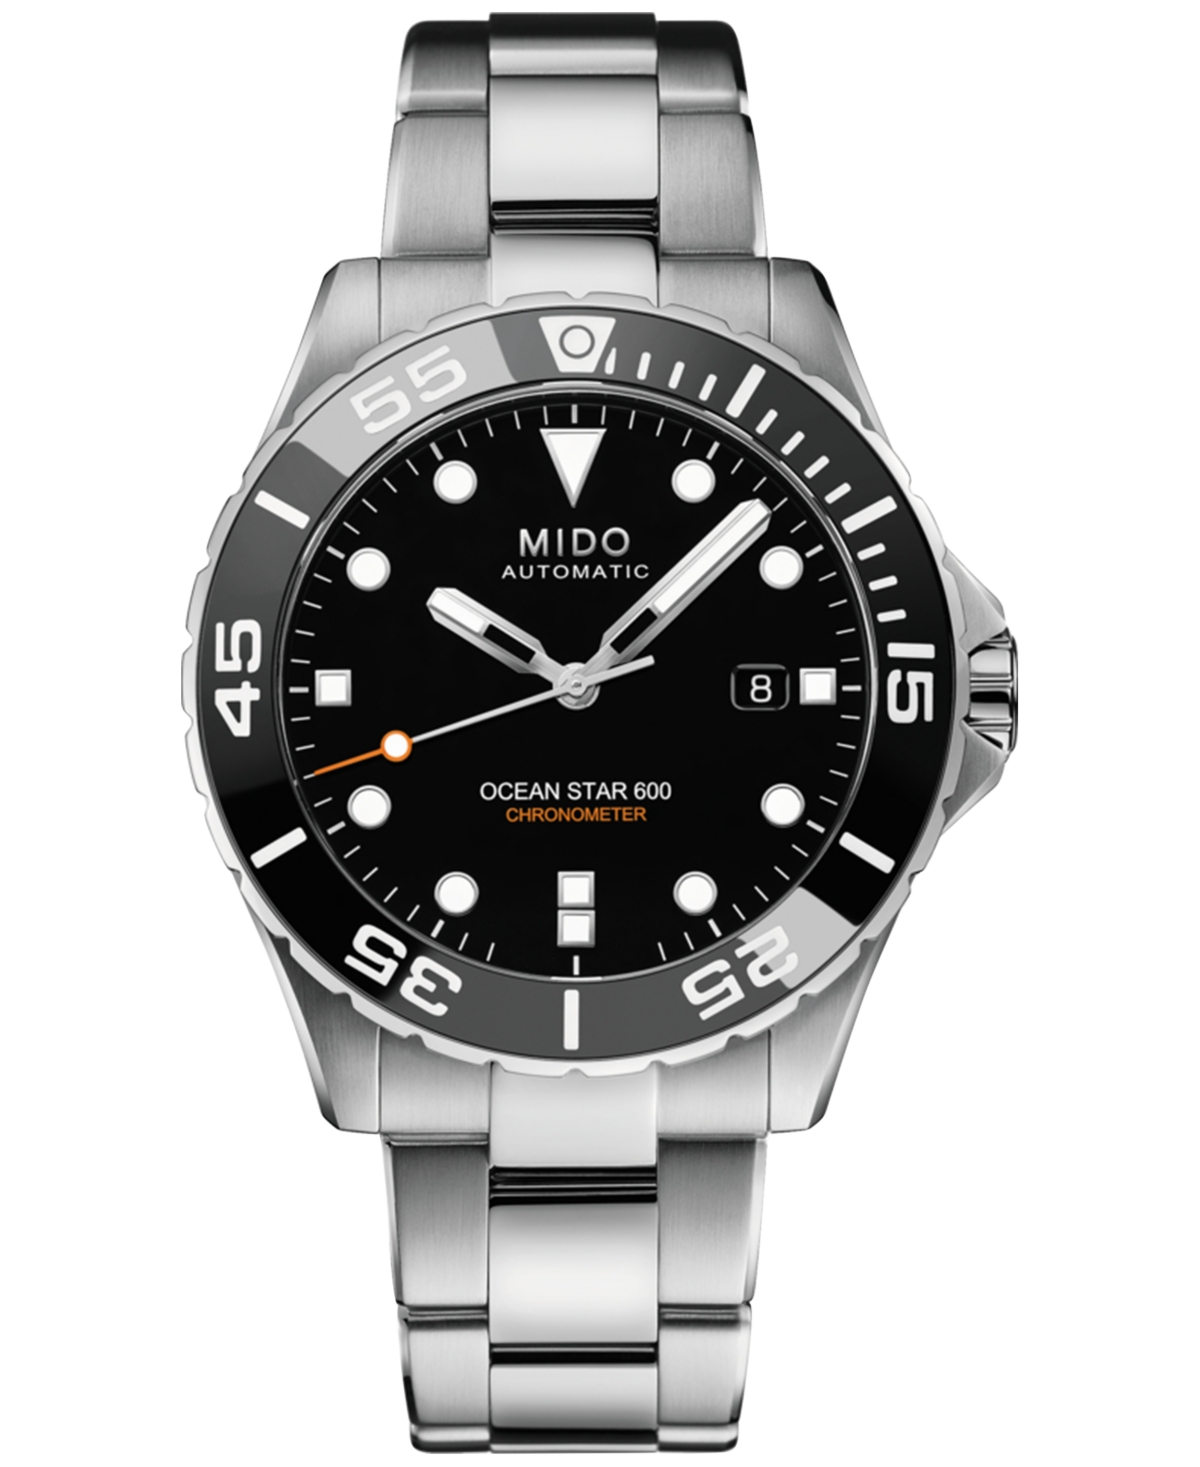 Mido Men's Swiss Automatic Ocean Star 600 Chronometer Stainless Steel Bracelet Watch 44mm In Black